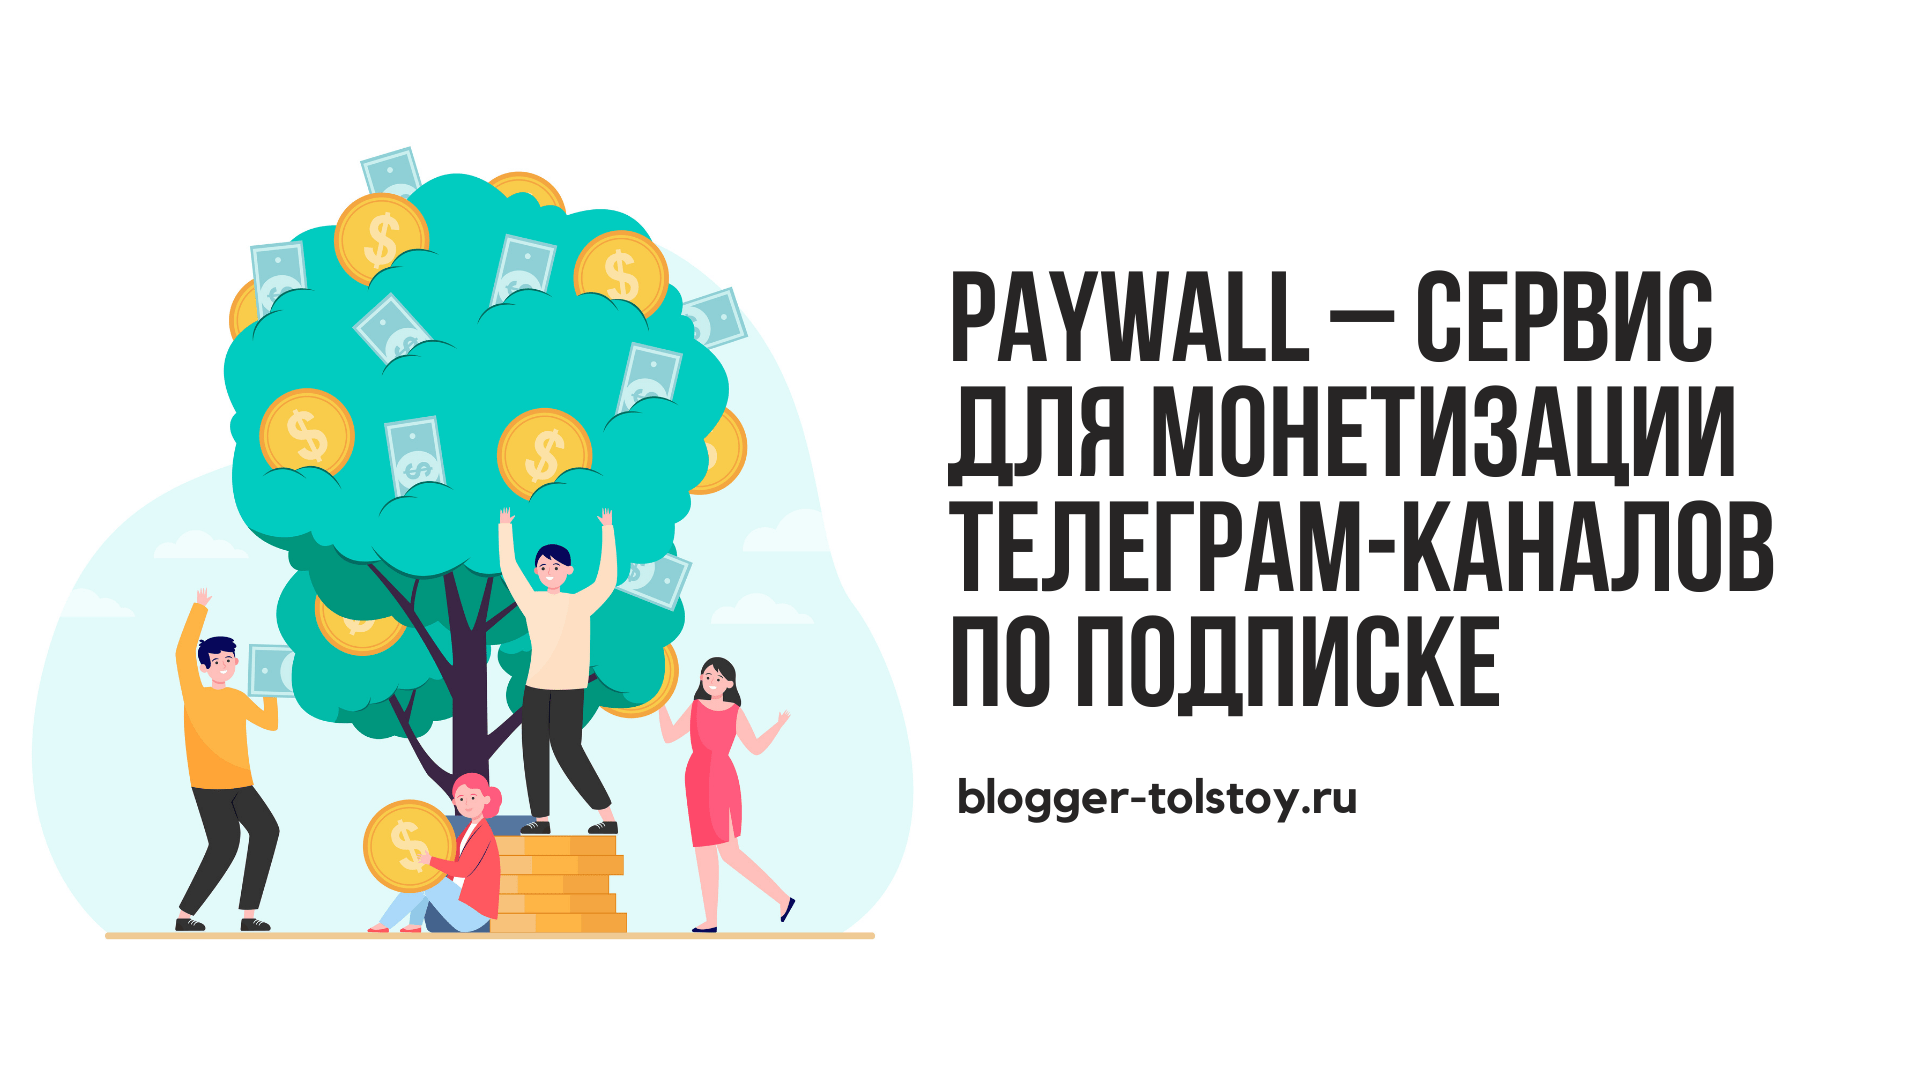 Paywall - сервис для монетизации Телеграм-каналов по подписке